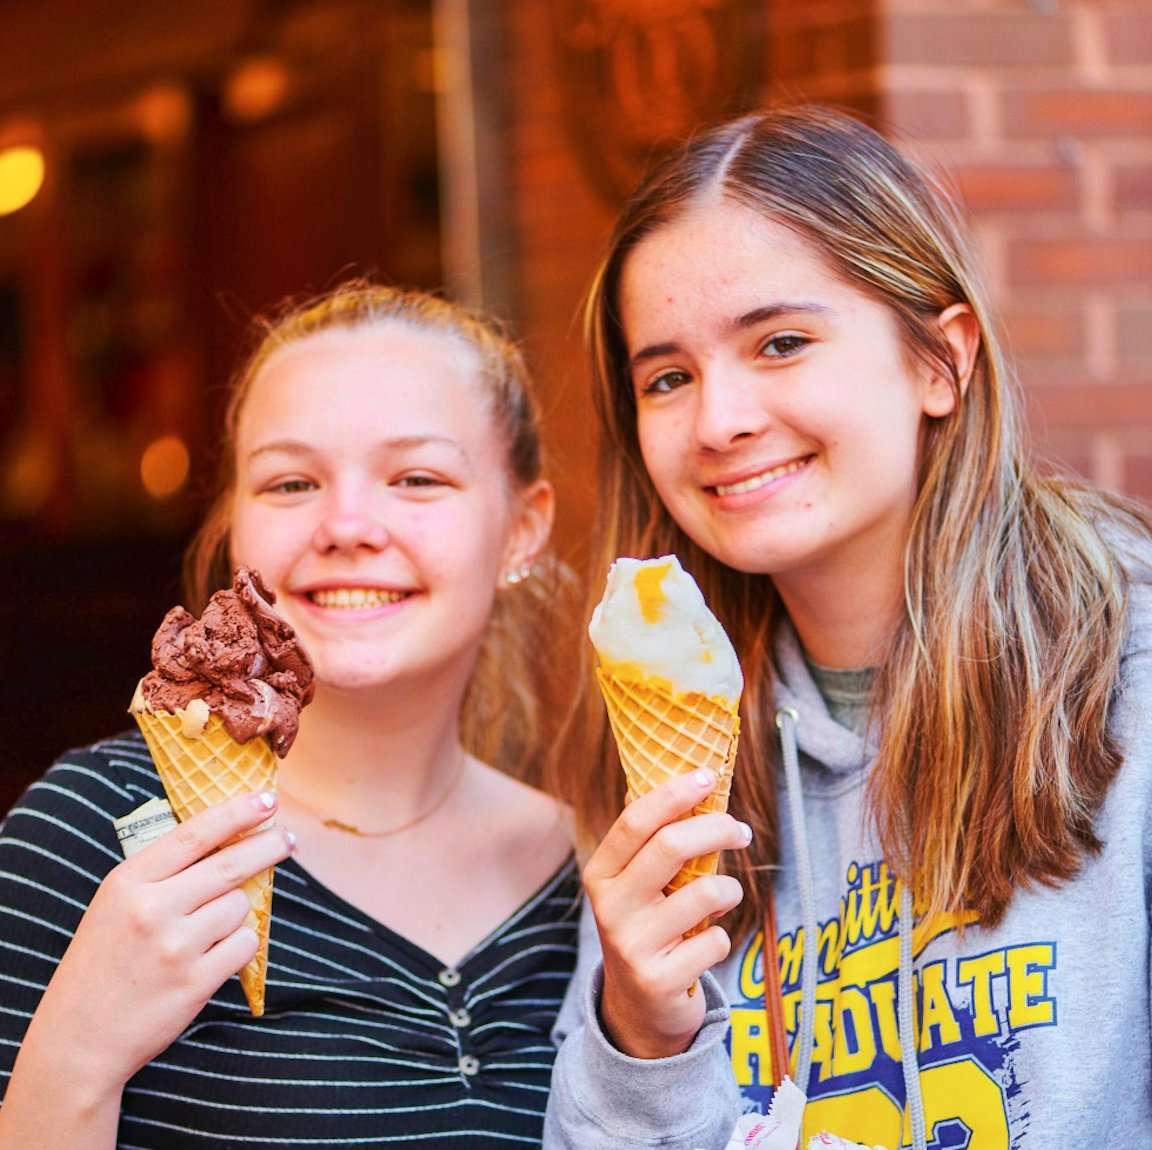 All smiles on this sunny afternoon -- featuring fresh-scooped gelato! 🤤 #FerraraNYC

#LittleItaly #ItalianEats #ItalianTreats #ItalianBakery #LittleItalyNYC #NYCBakery #NYCBakeries #ItalianDessert #bestofNYC #NYCEats #DessertInsider #SecretNY #Gelato